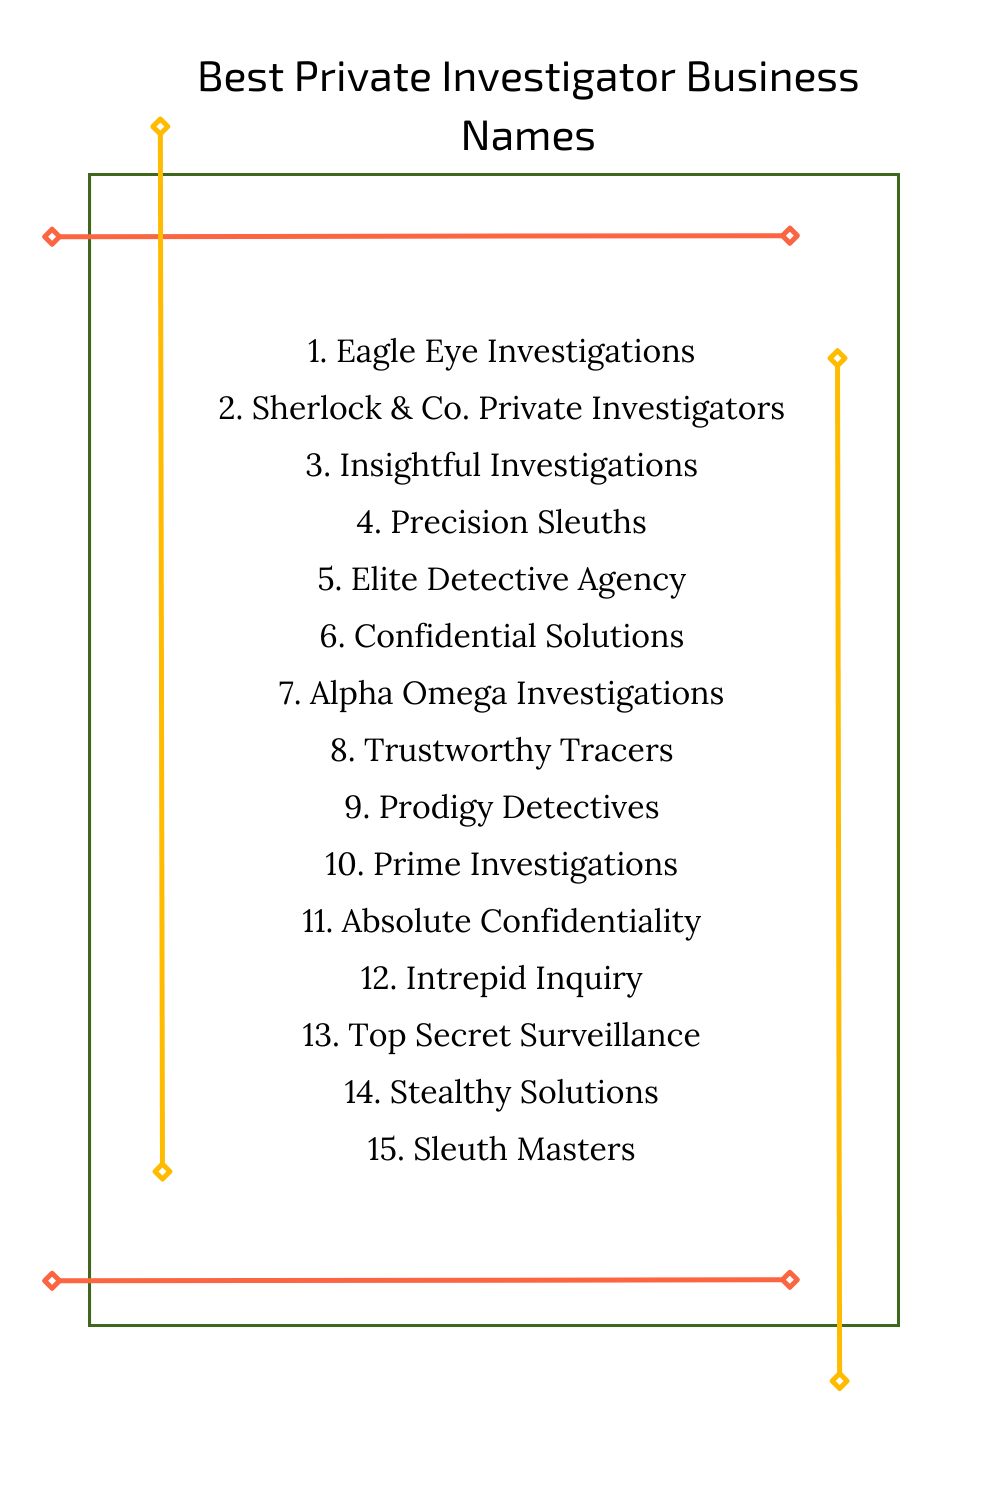 Best Private Investigator Business Names